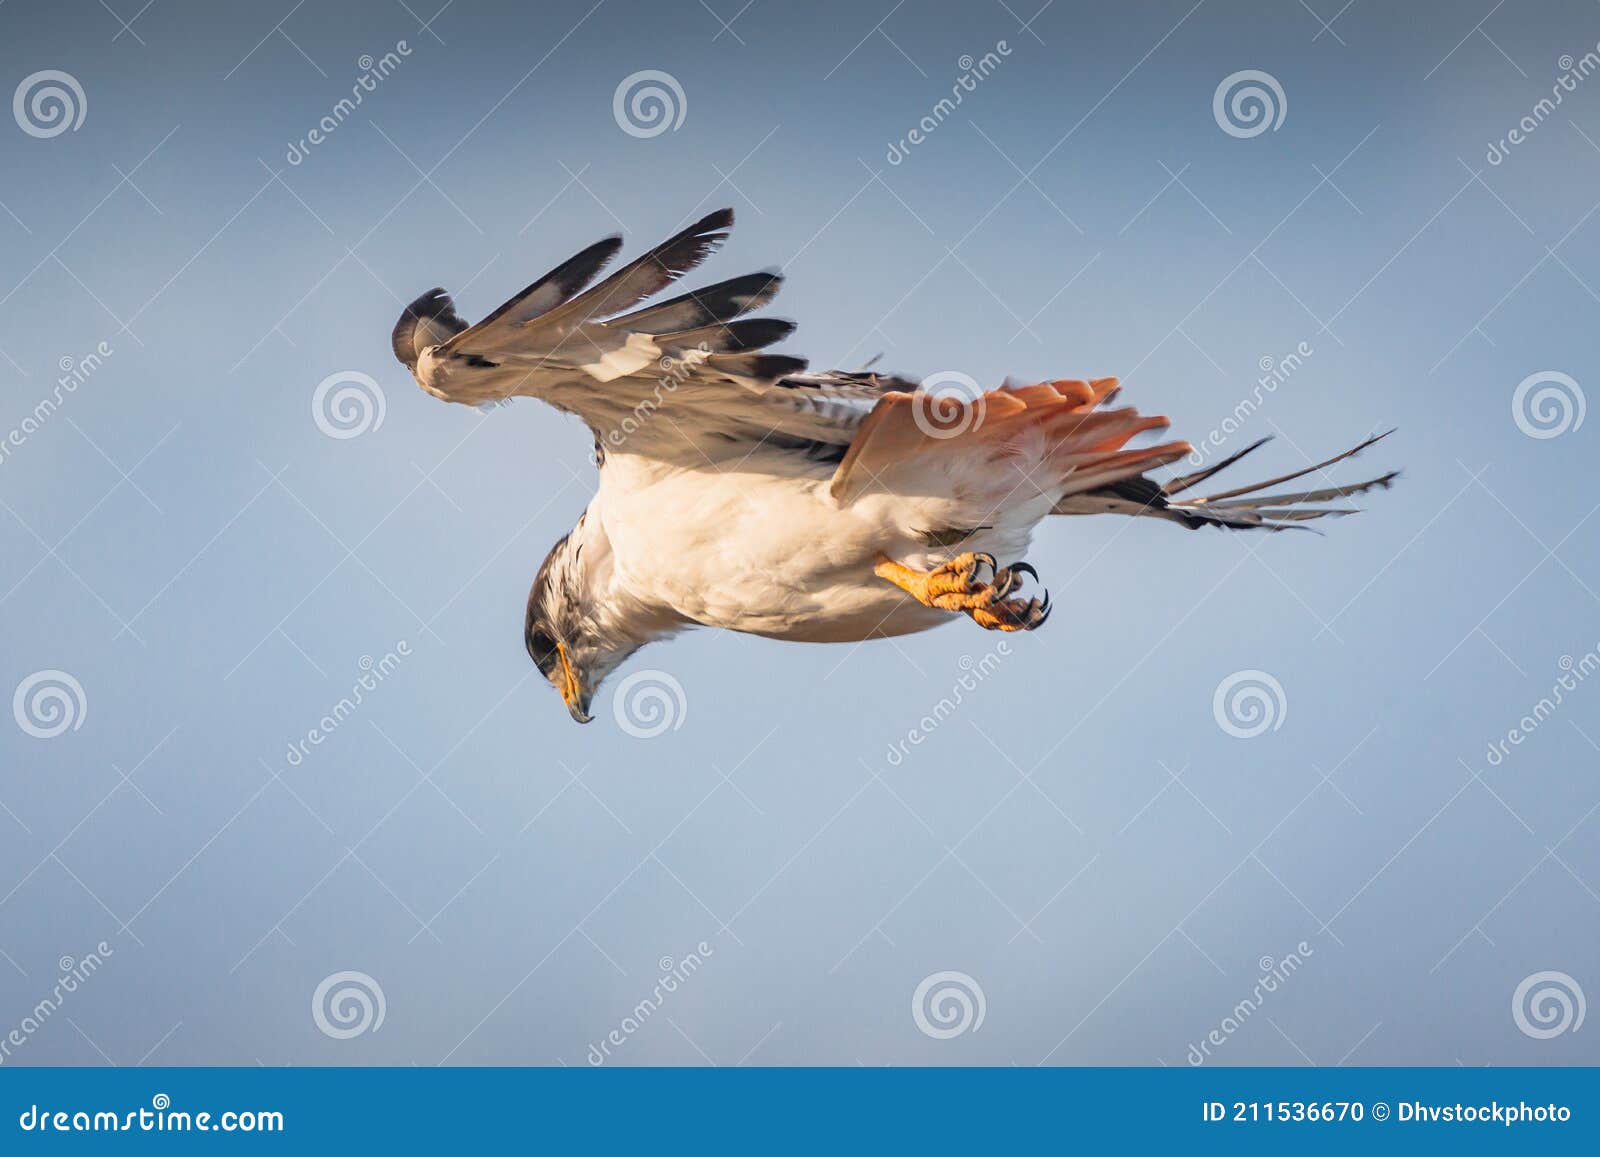 augur buzzard buteo augur in flight over grassland, ngorongoro crater, tanzania